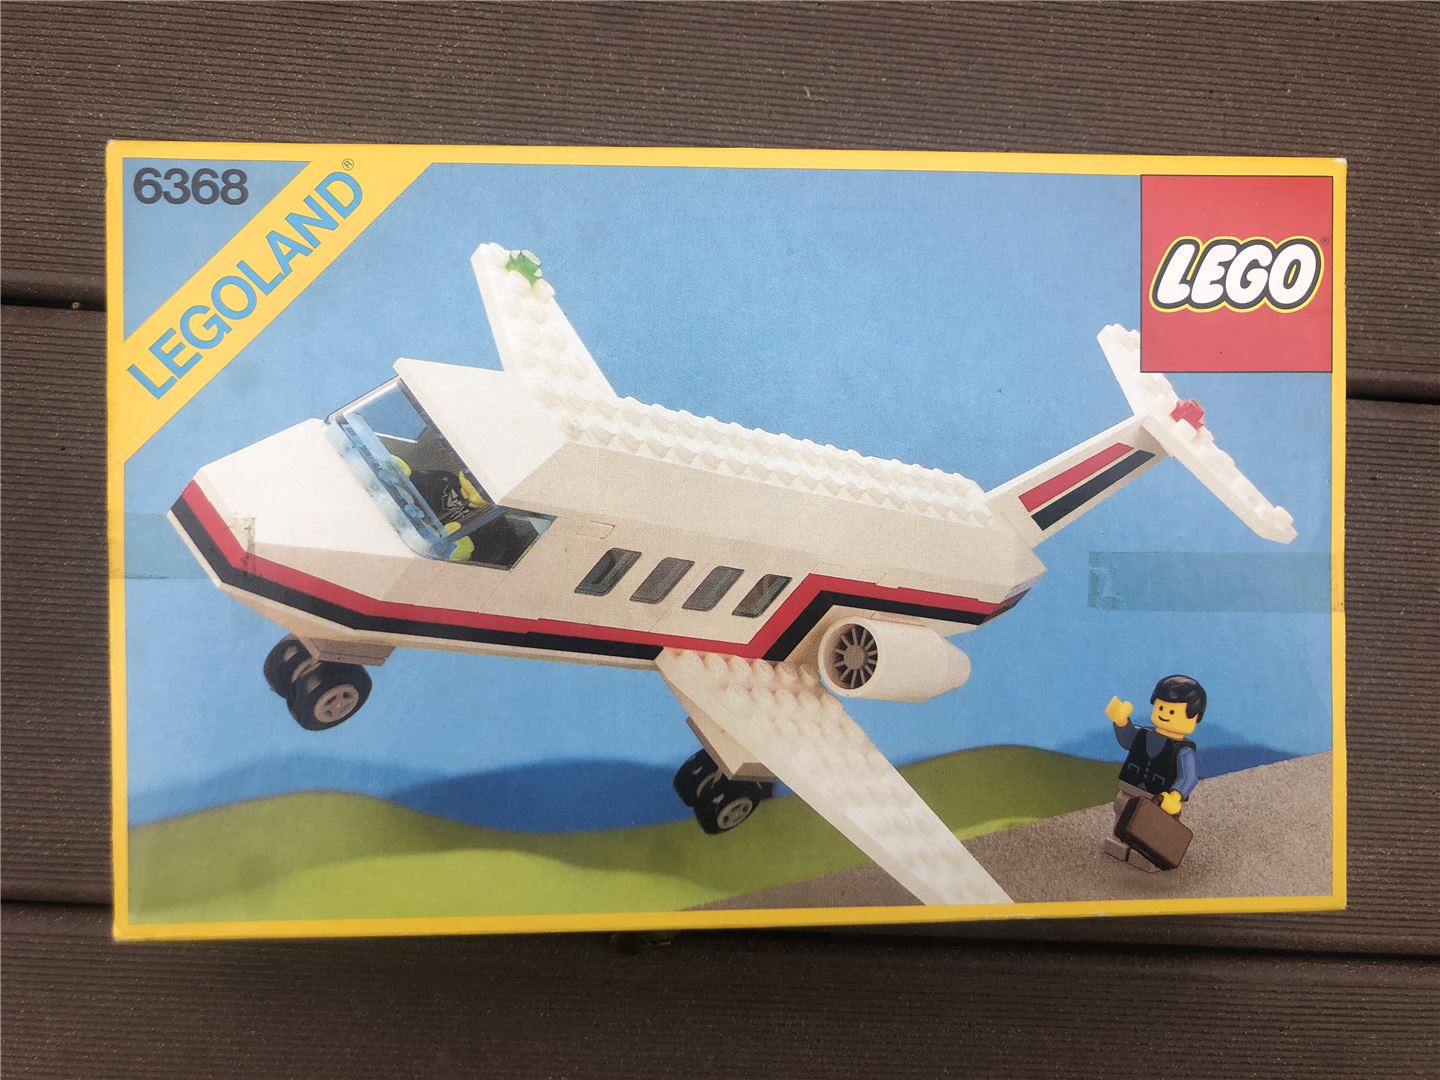 lego-6368-jet-airliner-town-used-pre-owned-united-kingdom-leeds-brad-en-151136-k0idk1w3.5w1.jpg